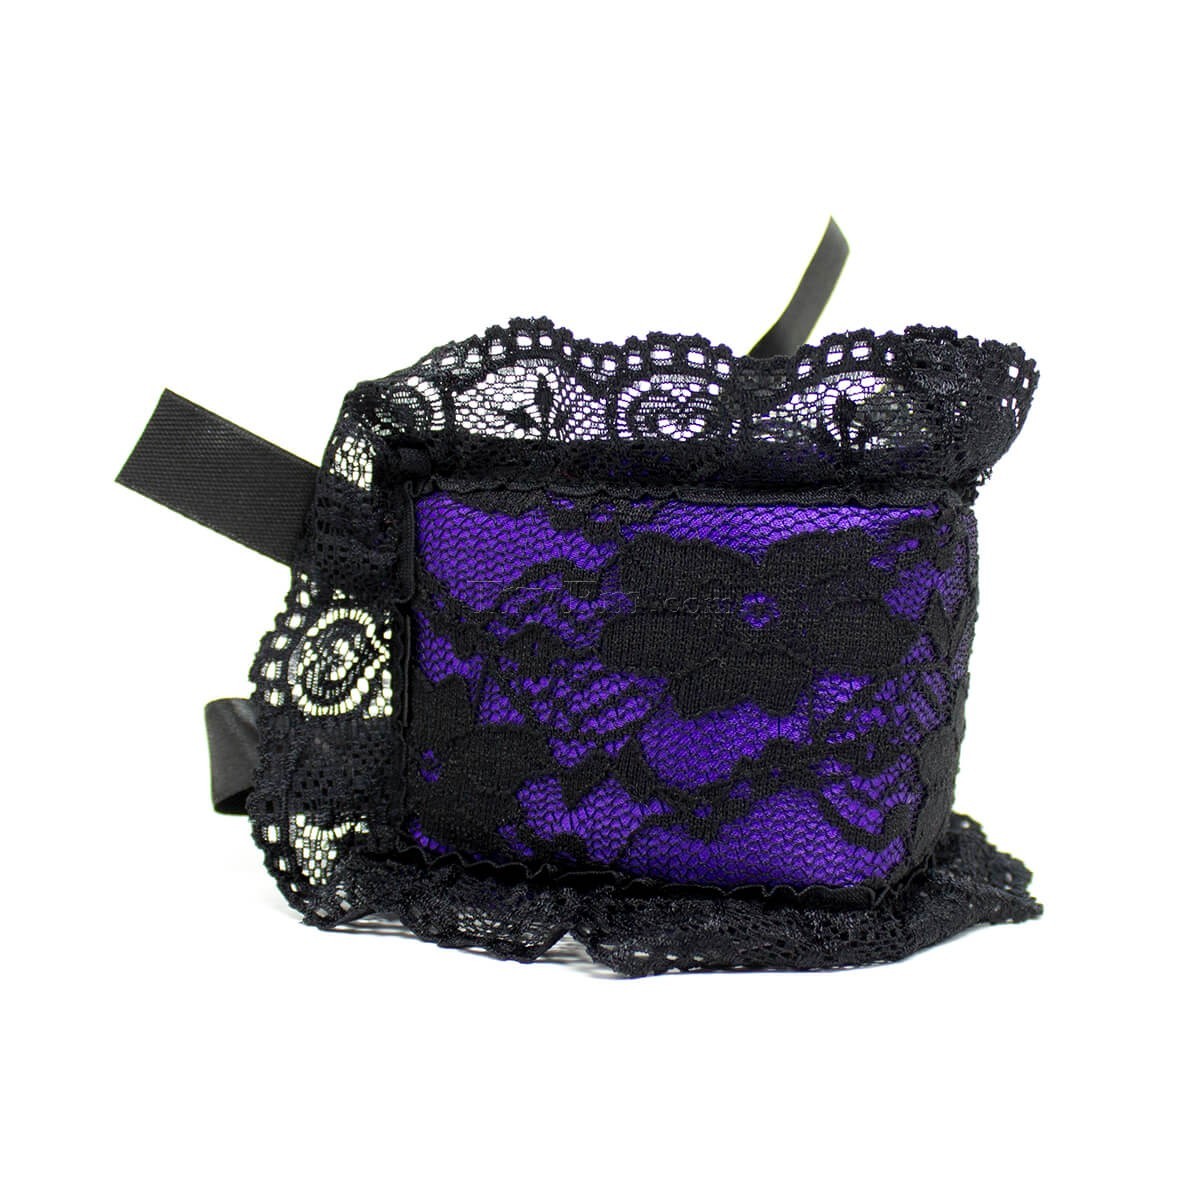 2-lace-blindfold-handcuffs-set-purple14.jpg